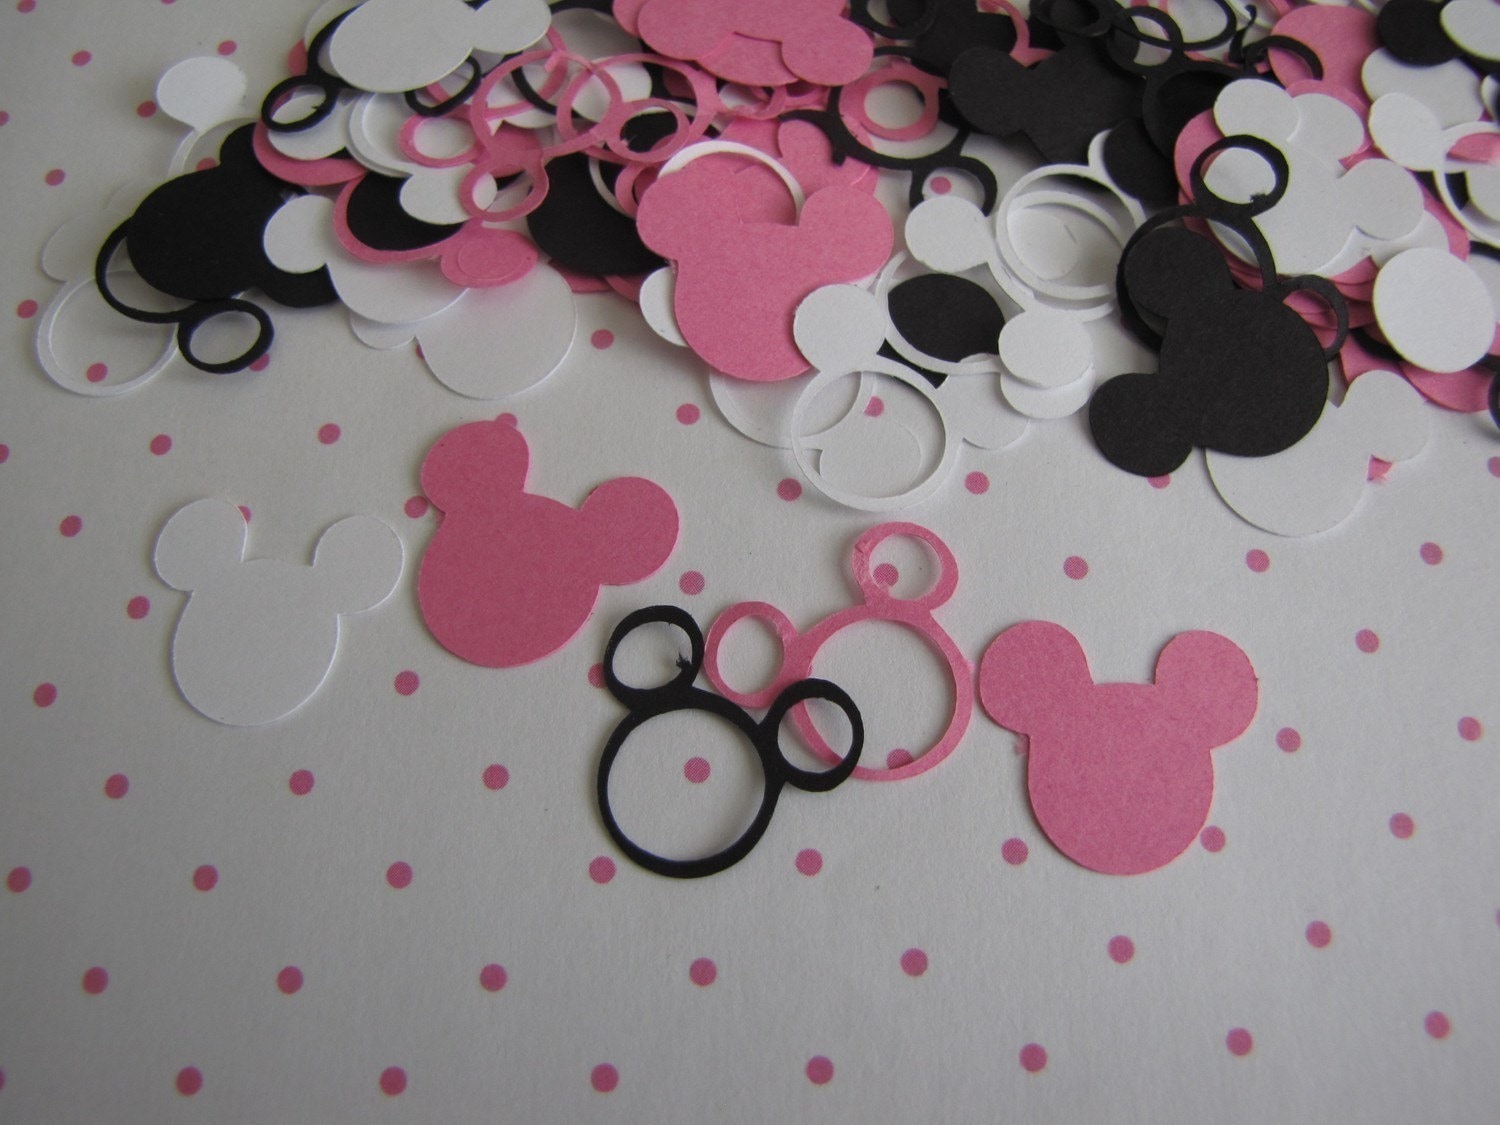 Minnie Mouse Confetti BLACKWHITEPINK 650 PIECES From uniqueboutiquebygami